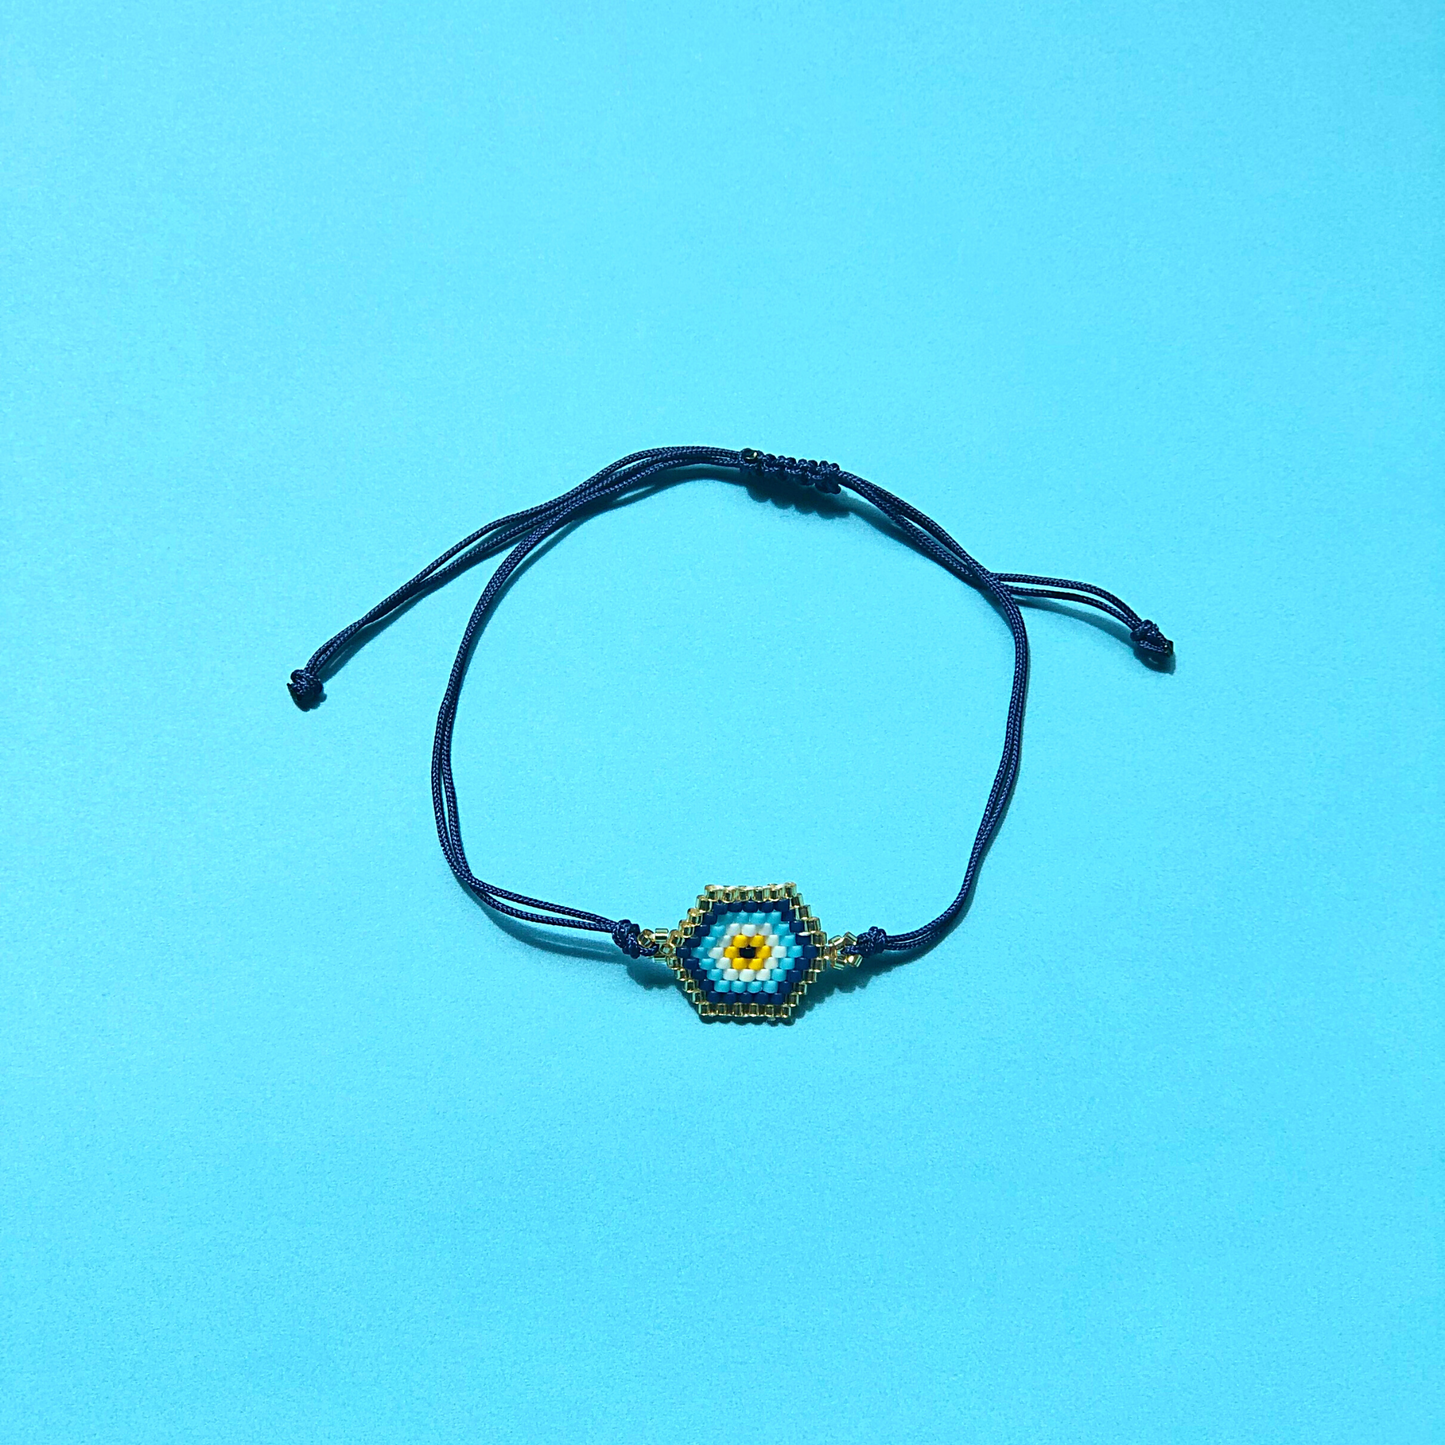 MARDIN EVIL EYE cord bracelet hand-woven with miyuki beads